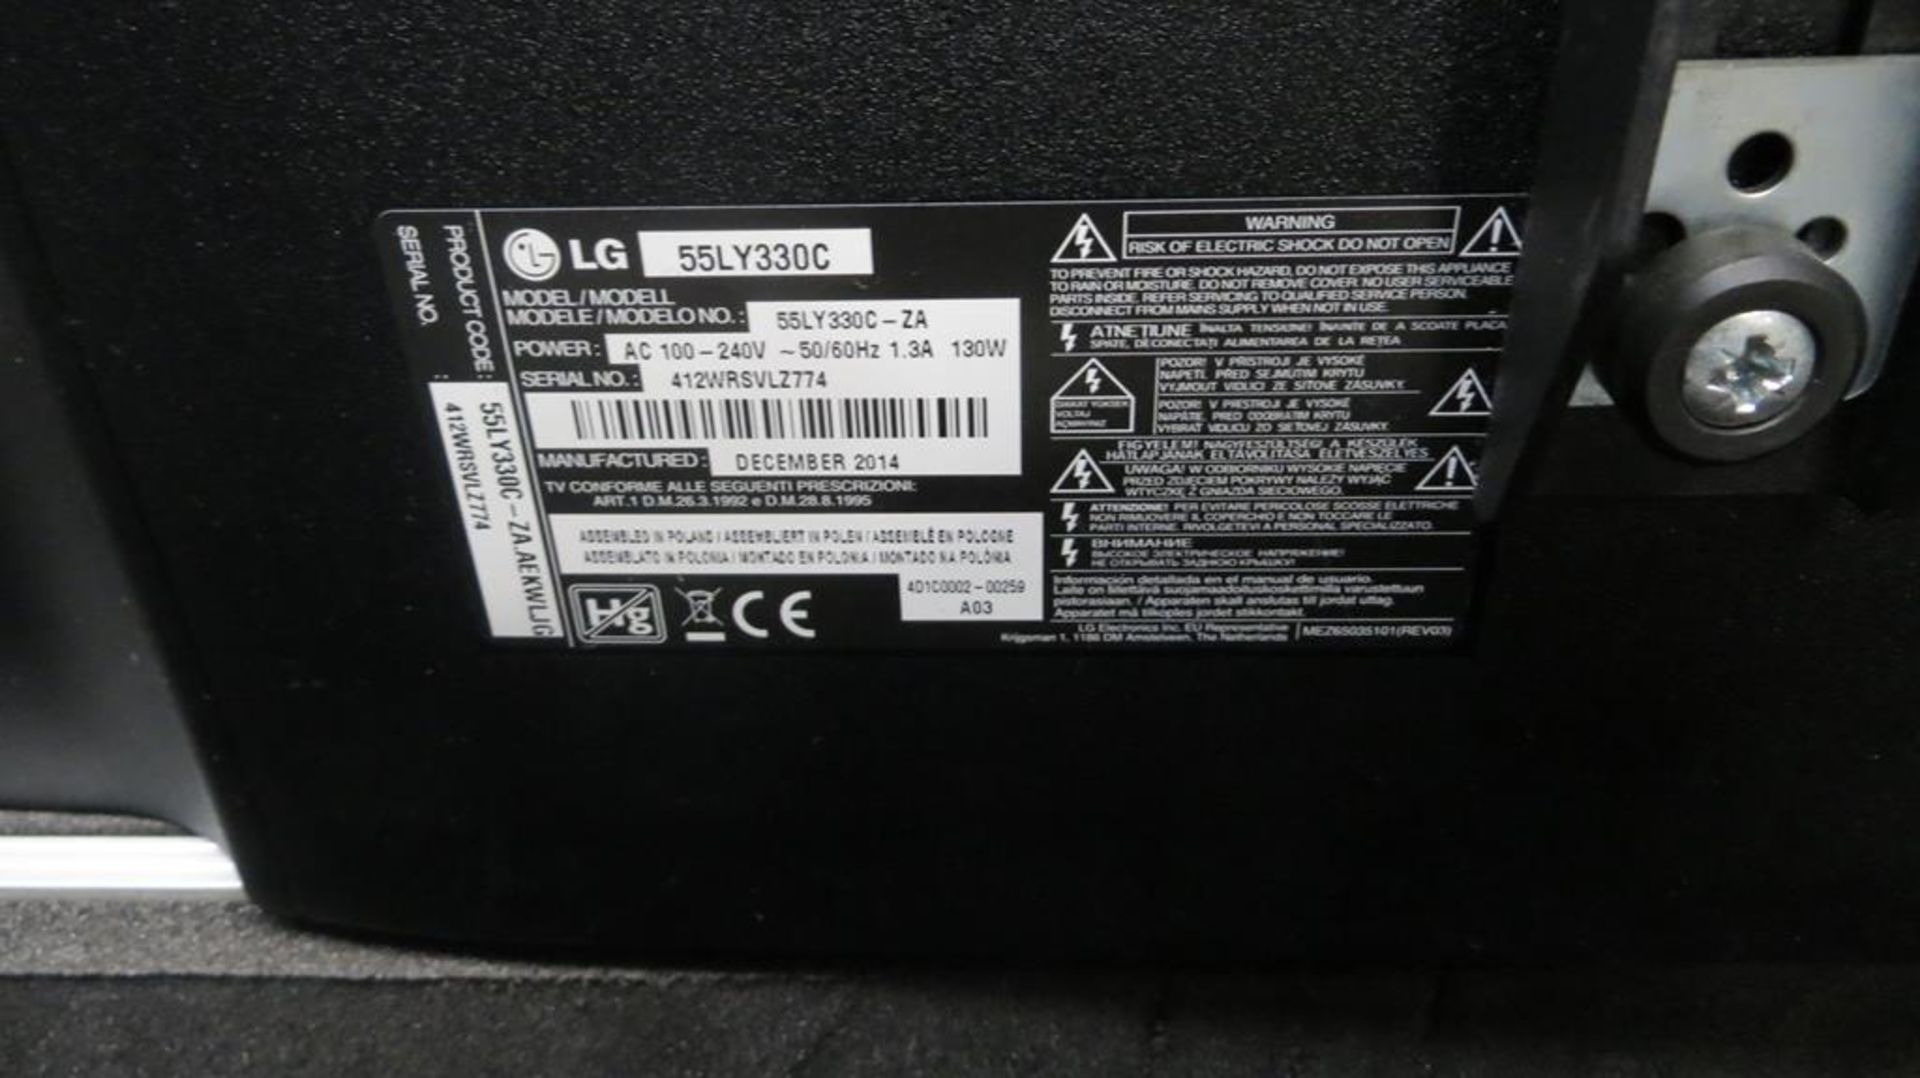 LG, 55" LED TV, Model: 55LY330C, Serial No. 412WRS - Image 3 of 3